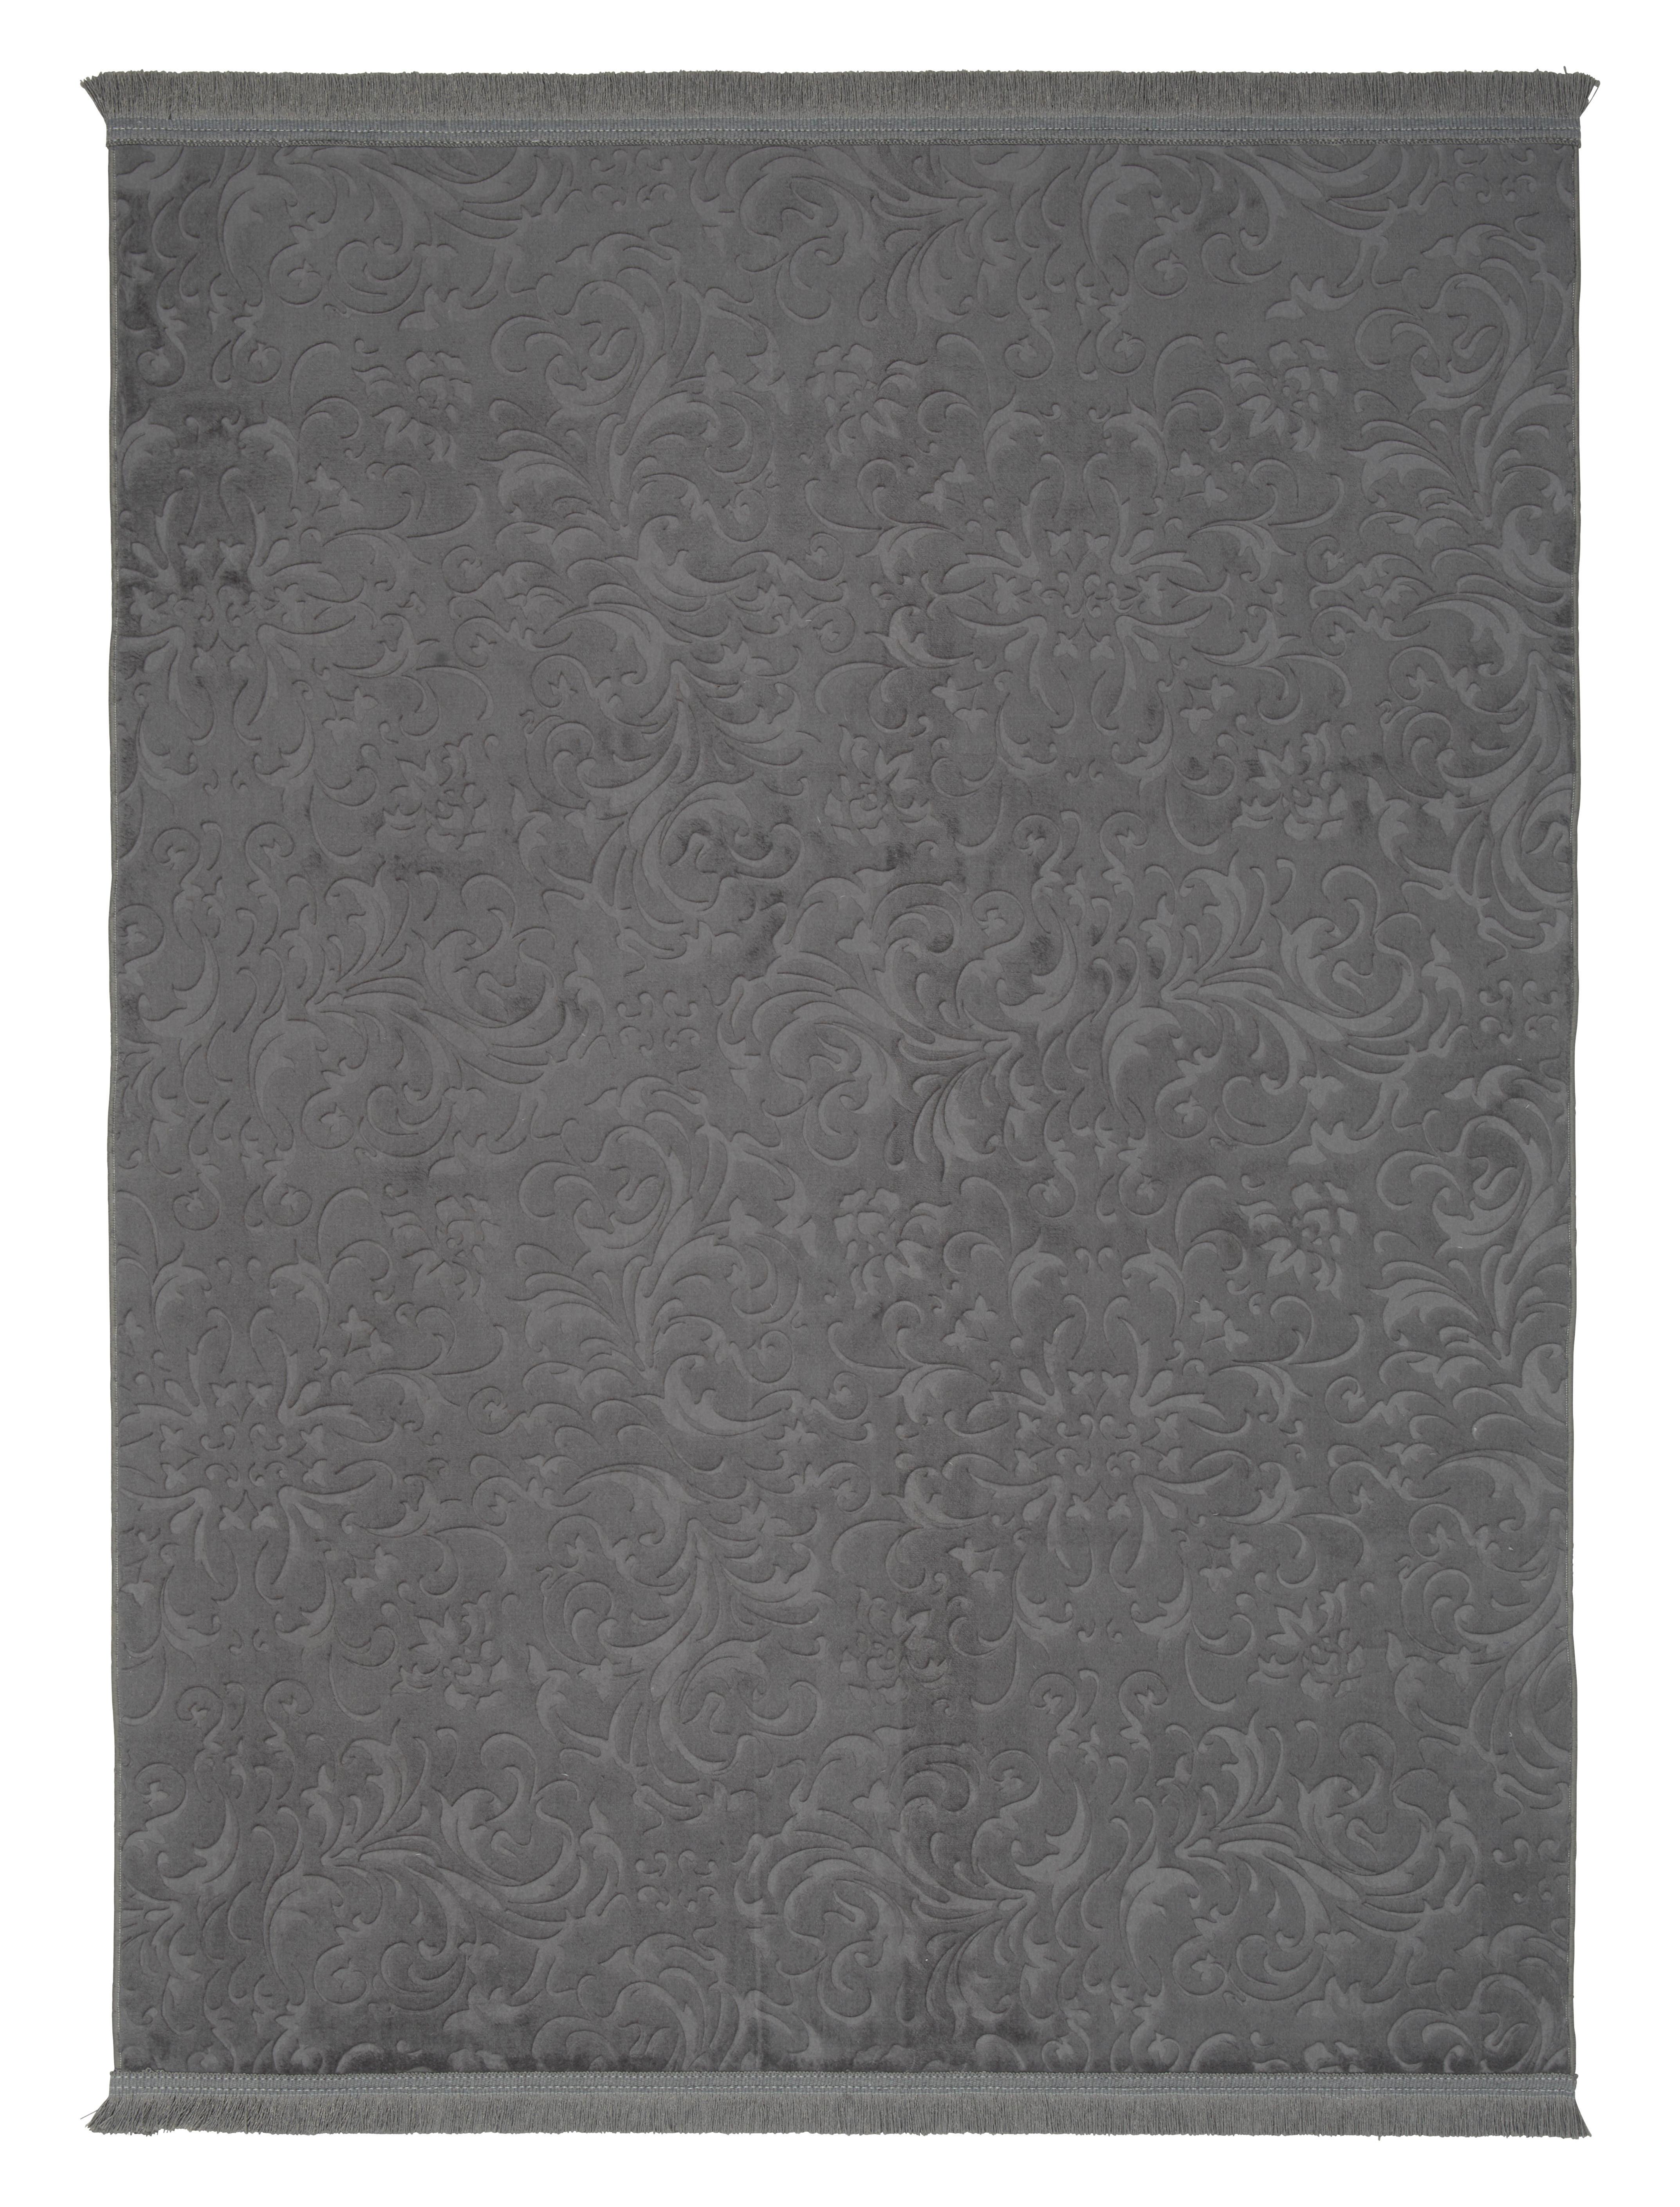 Tkaný Koberec Daphne 1, 80/140cm, Antracit - antracitová, Moderný, textil (80cm) - Modern Living